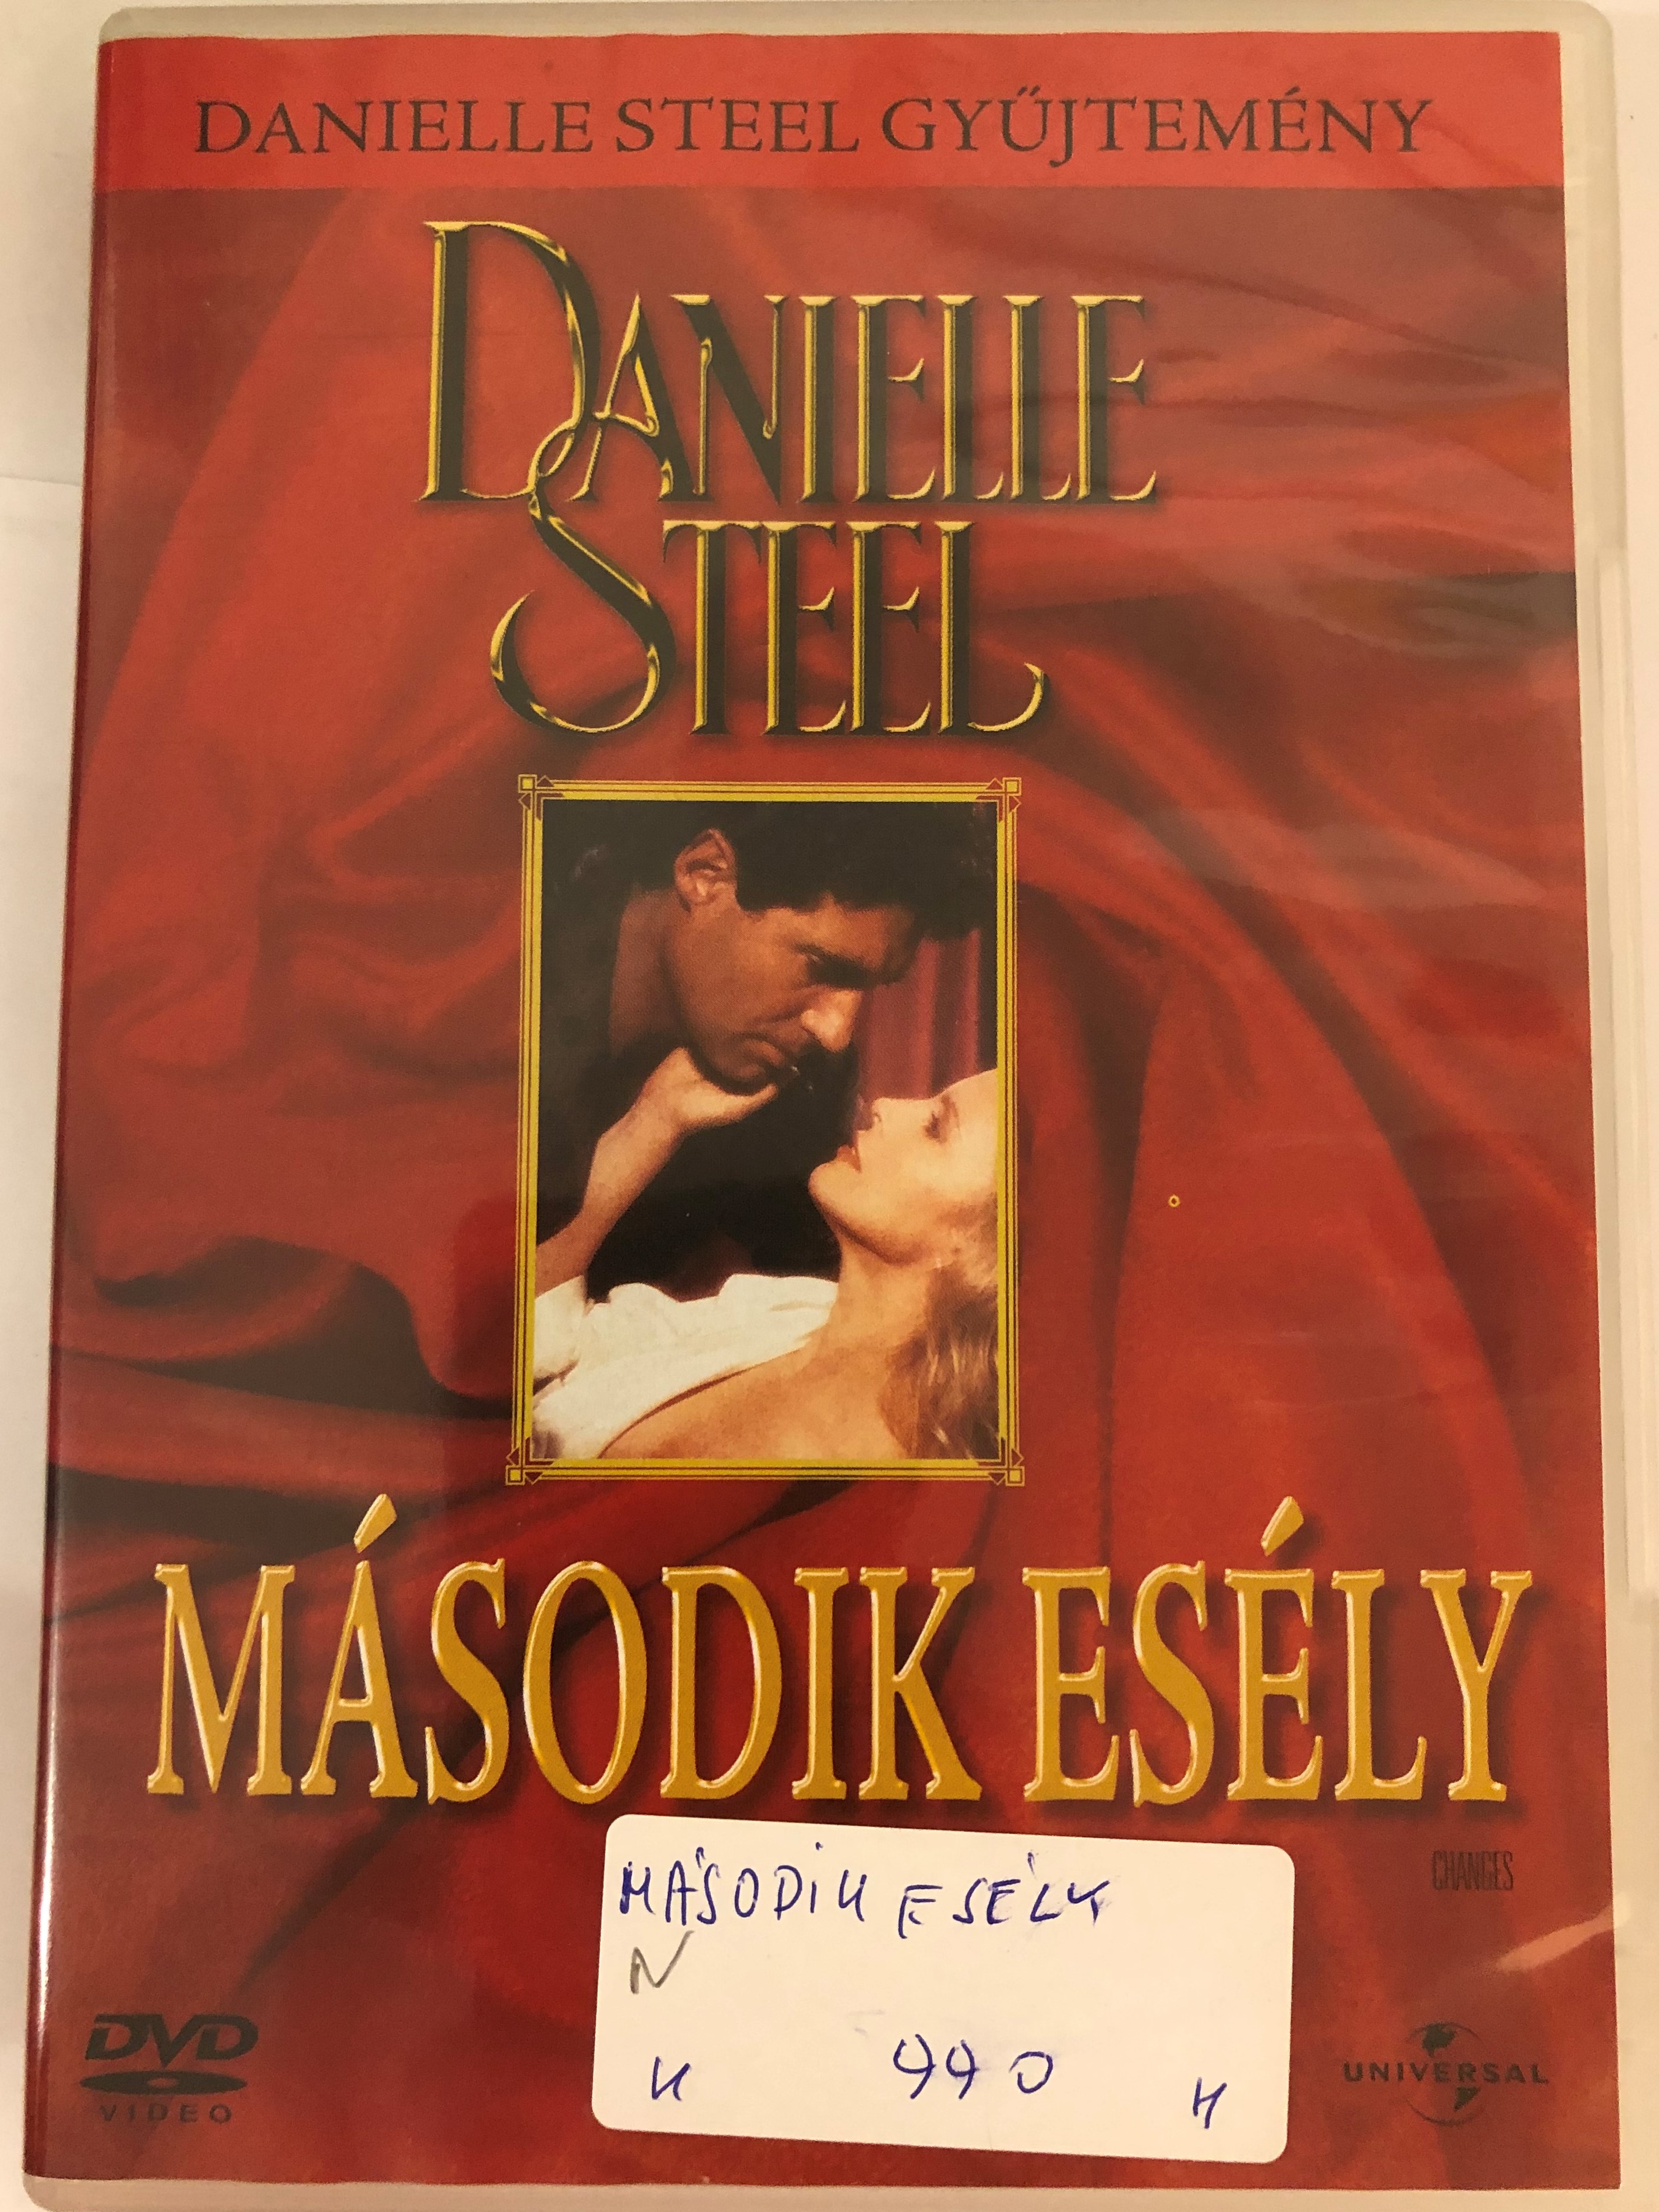 danielle-steel-s-changes-dvd-1991-m-sodik-es-ly-danielle-steel-gy-jtem-ny-1.jpg